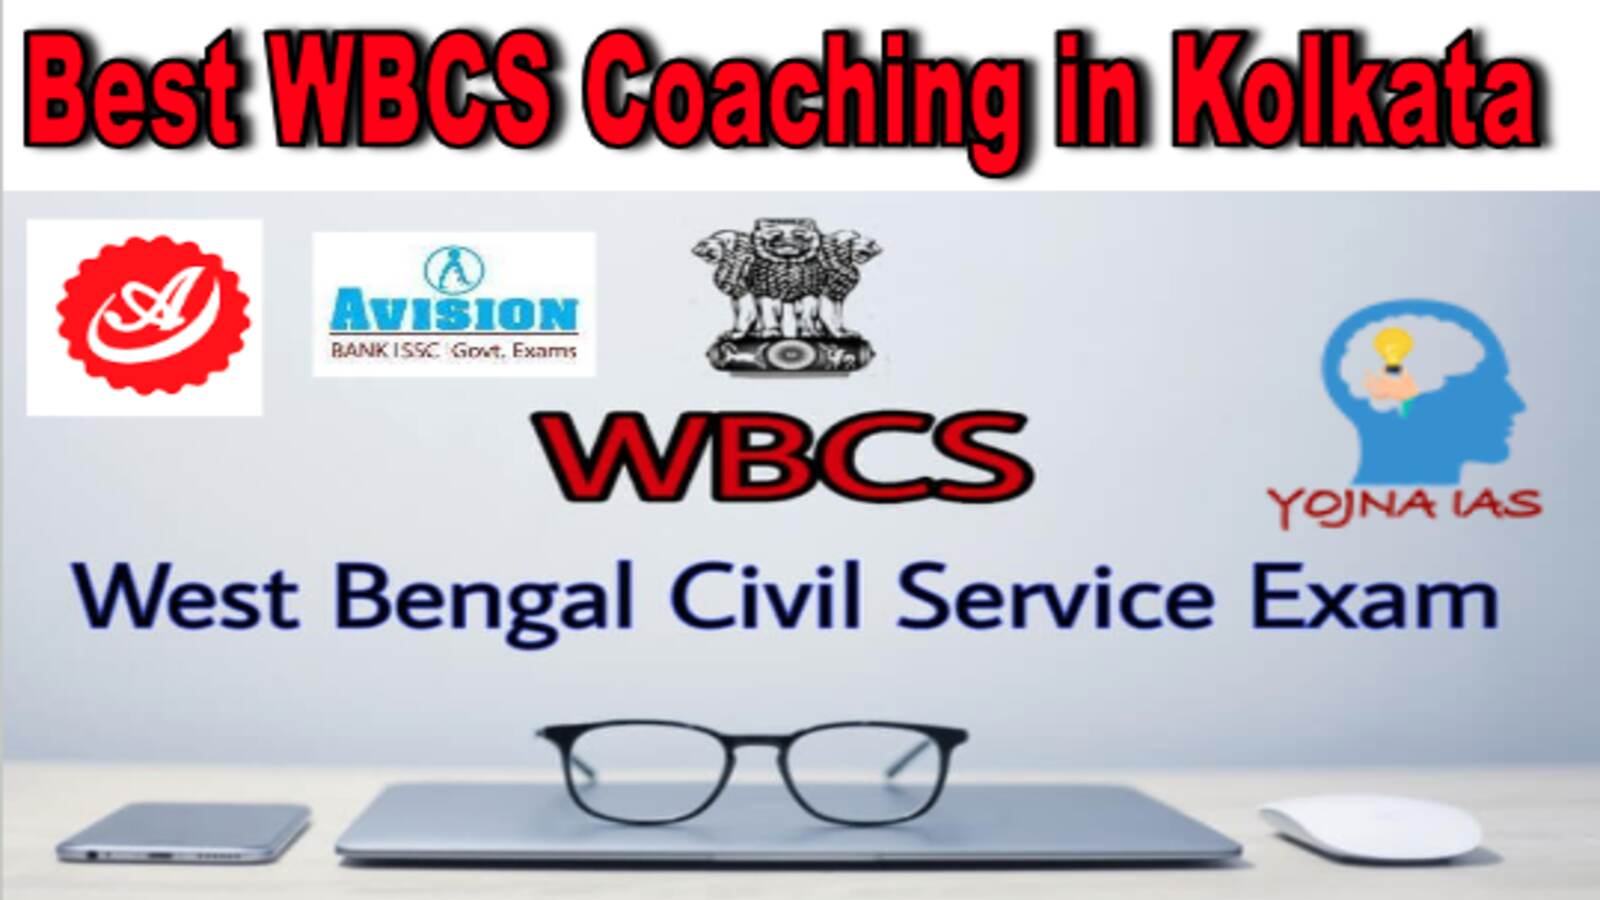 Best WBCS Coaching institute in Kolkata